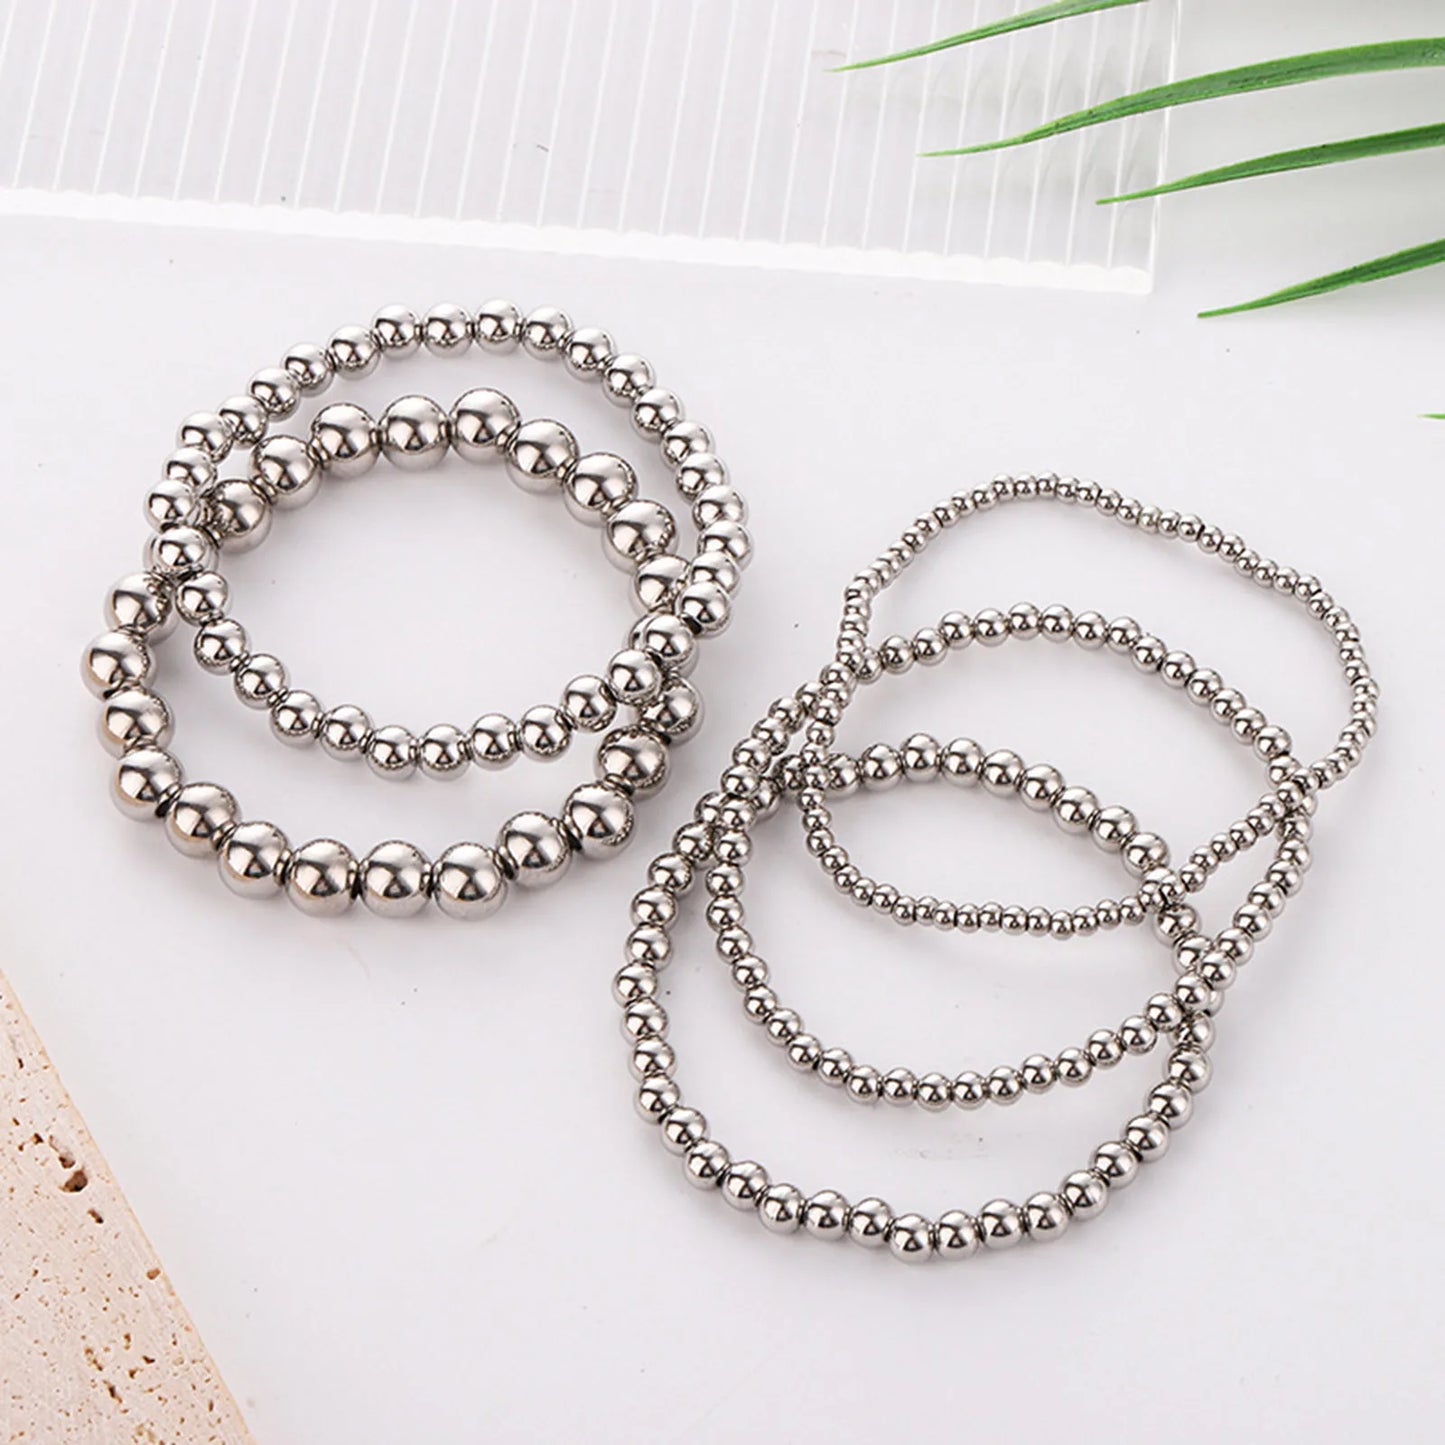 3 4 5 6 8mm Stainless Steel Beaded Bracelets Jewelry Silver Color Elastic For Women Men Party Bracelets Jewelry Gifts 18cm long